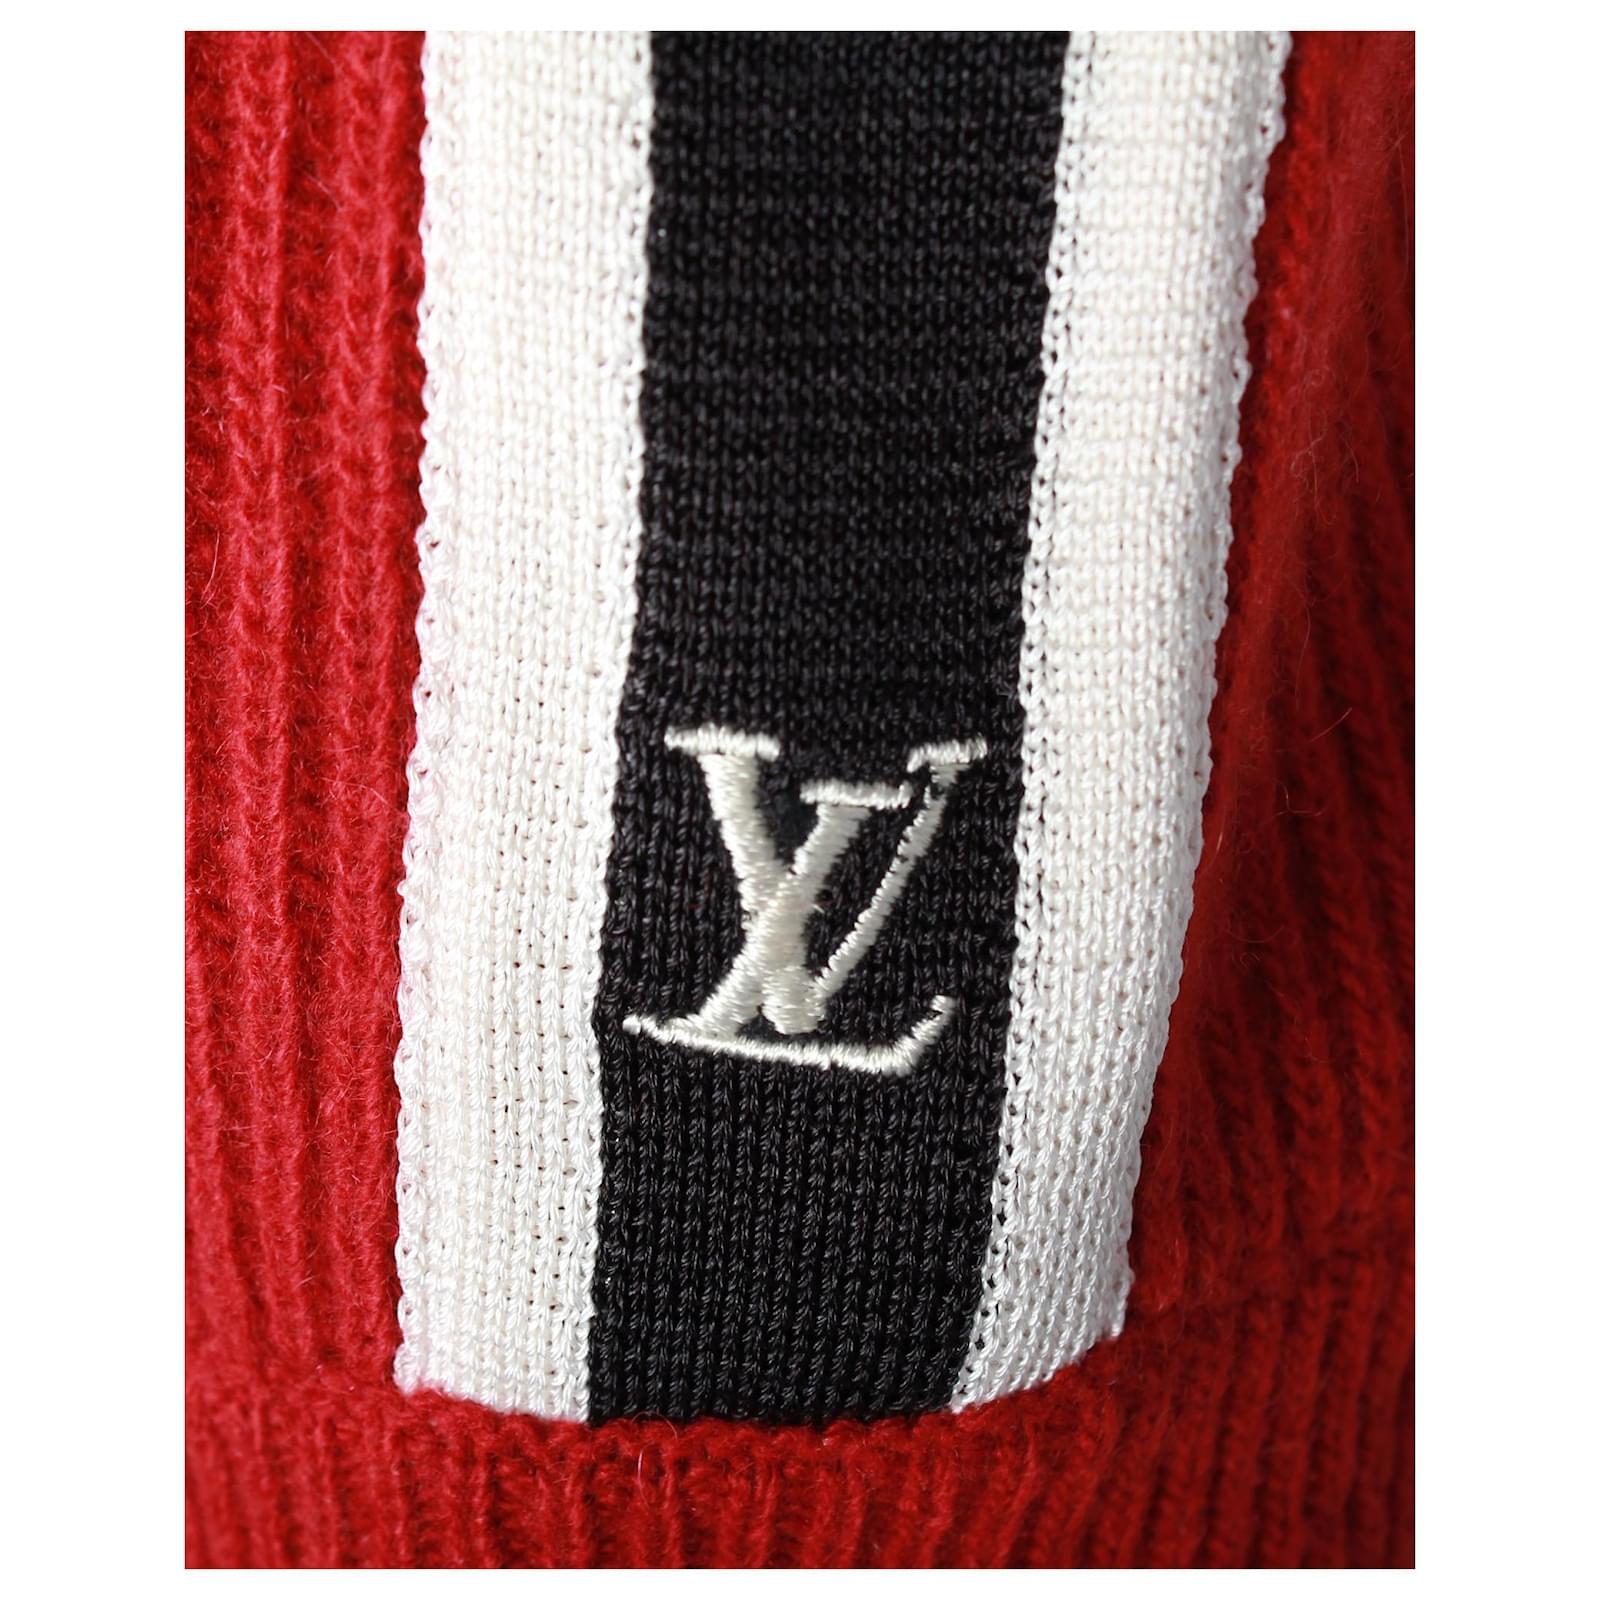 Louis Vuitton Cream Wool & Cashmere Turtleneck Sweater M Louis